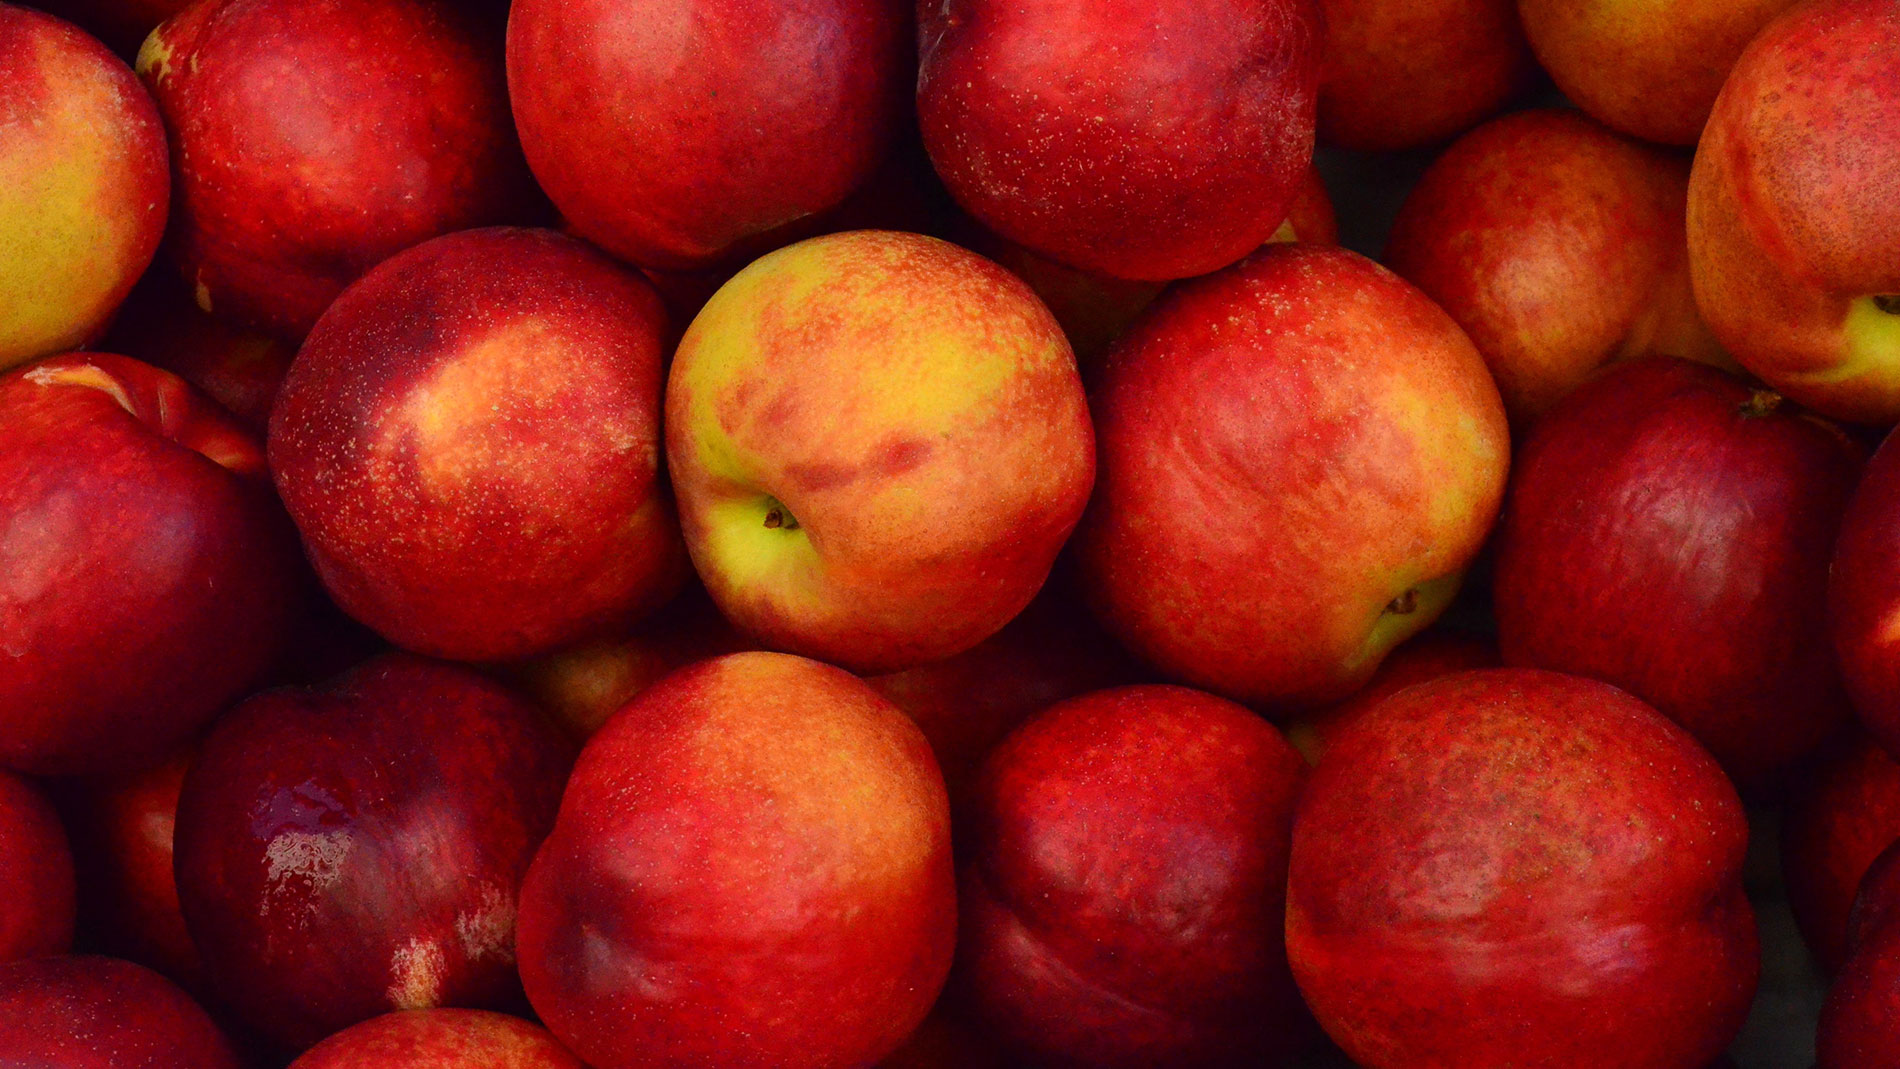 apples in st. louis missouri eckert's farm